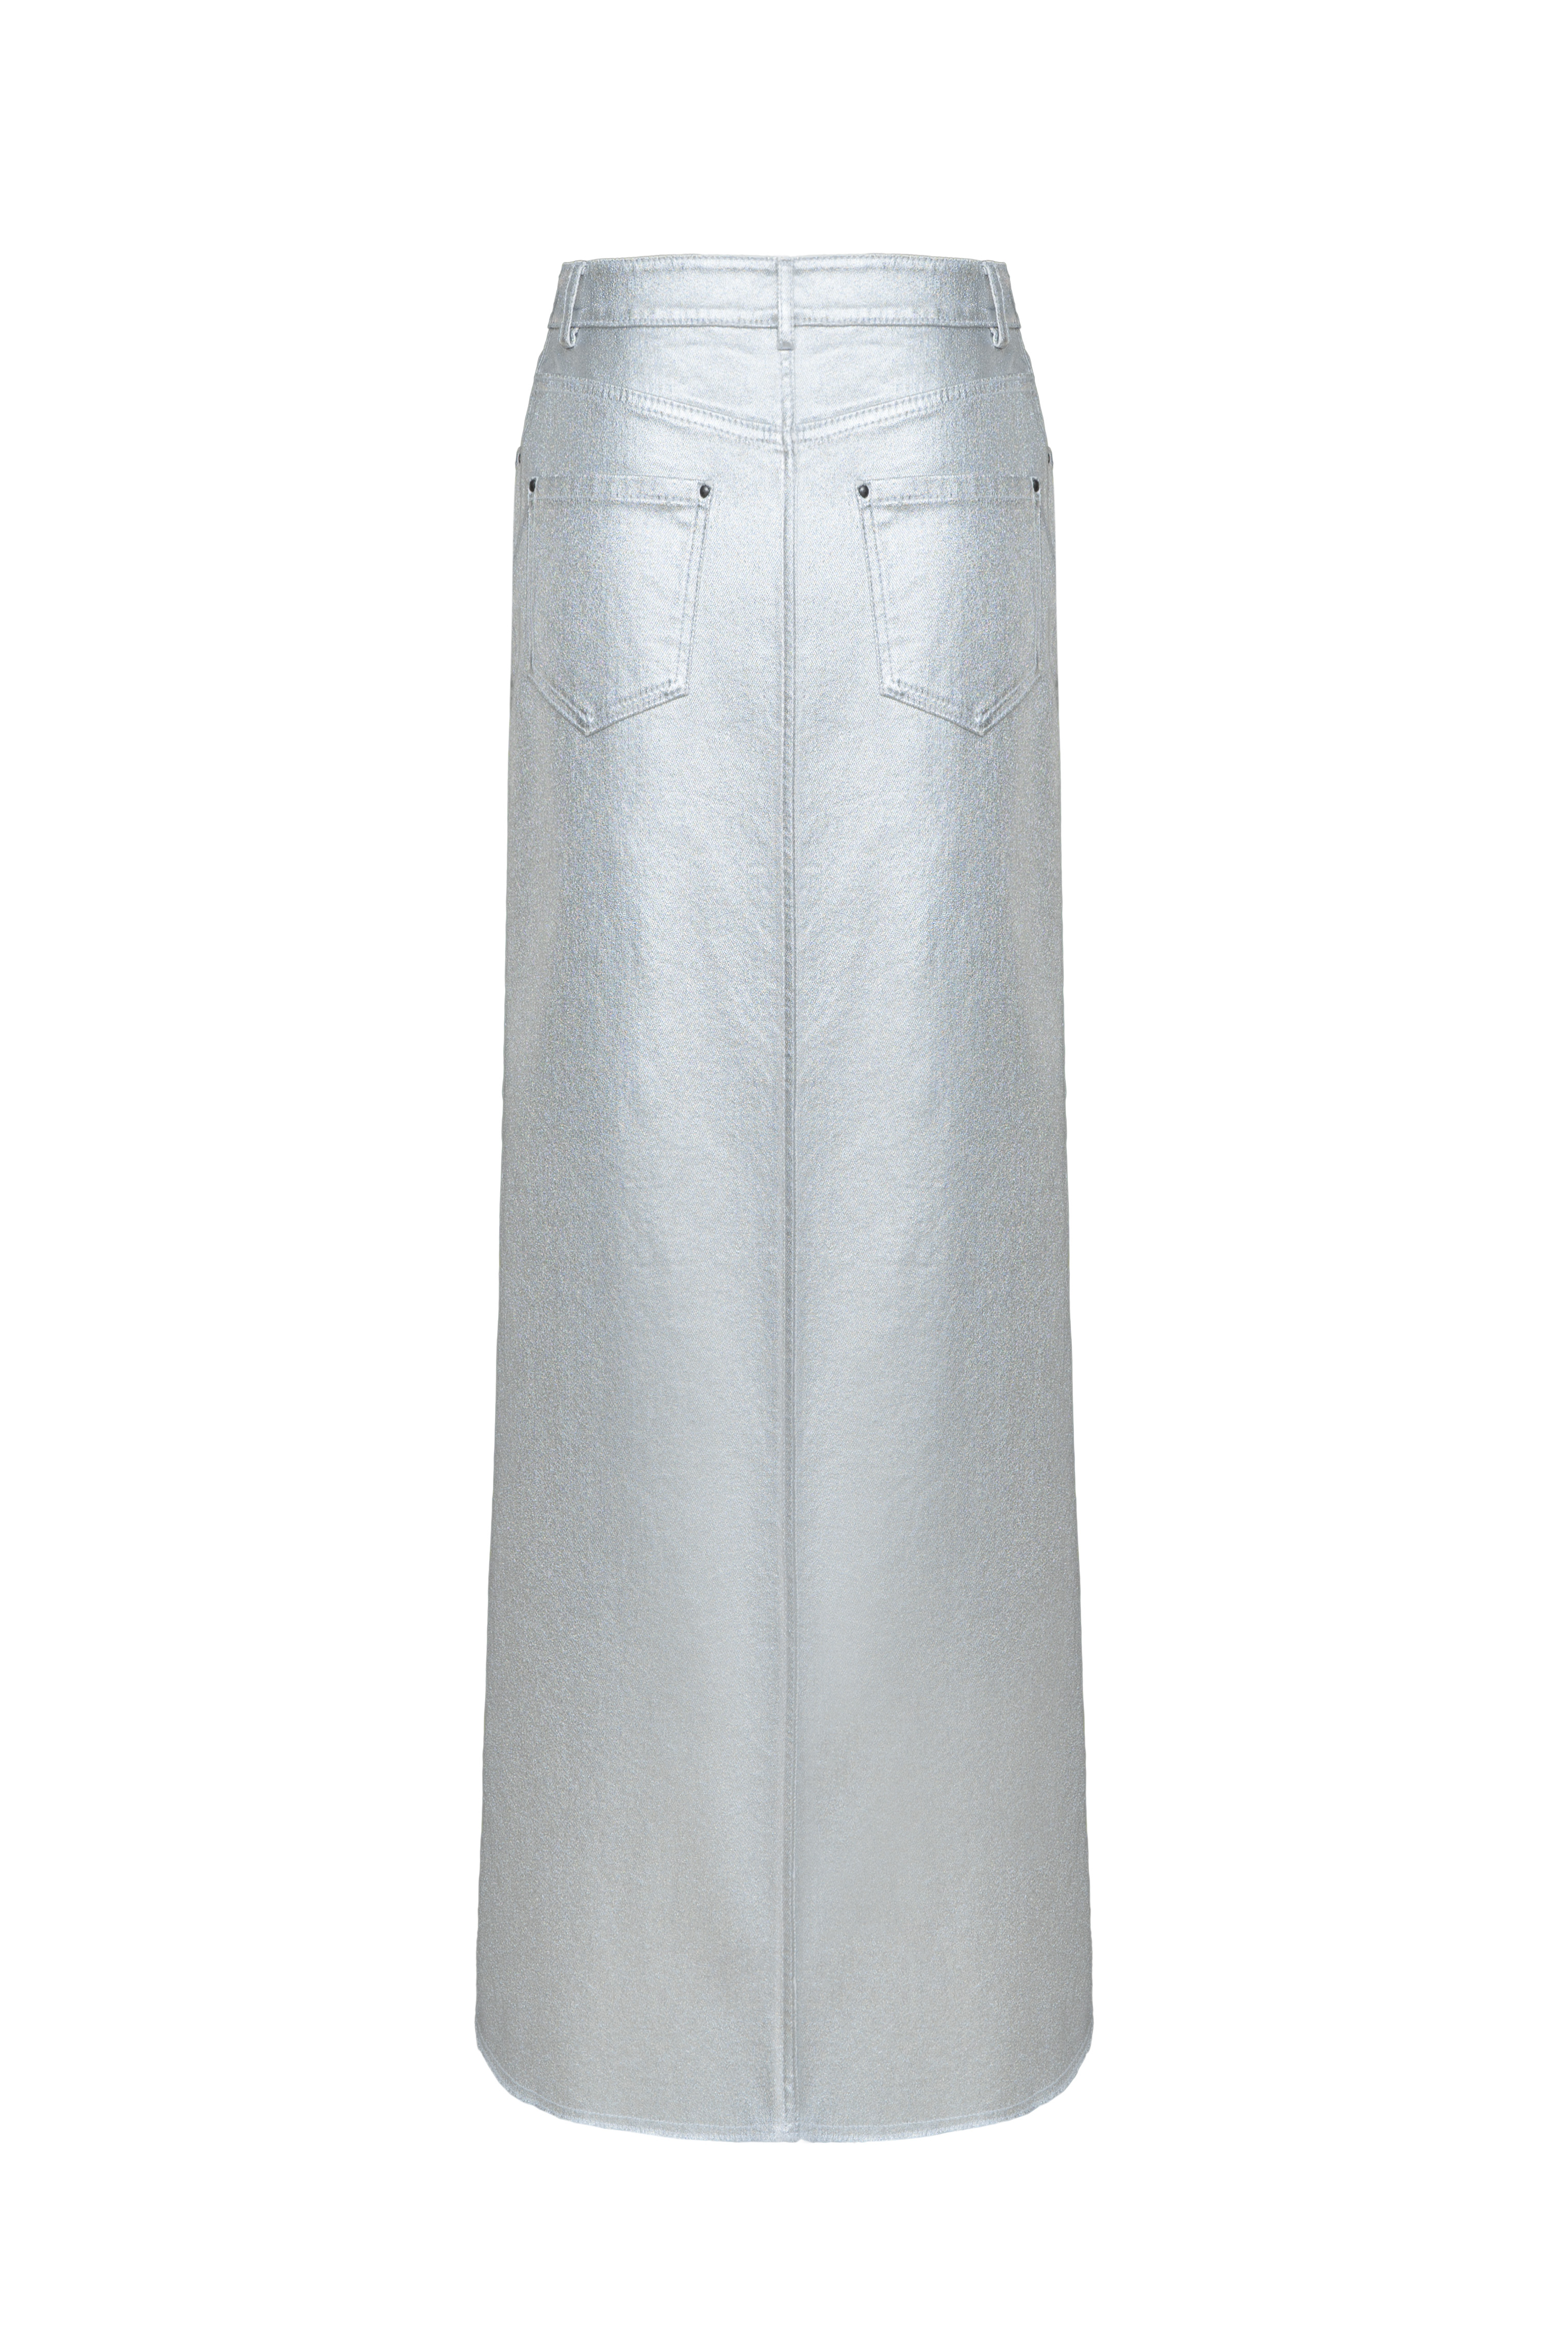 Skirt 4900-19 Silvery from BRUSNiKA